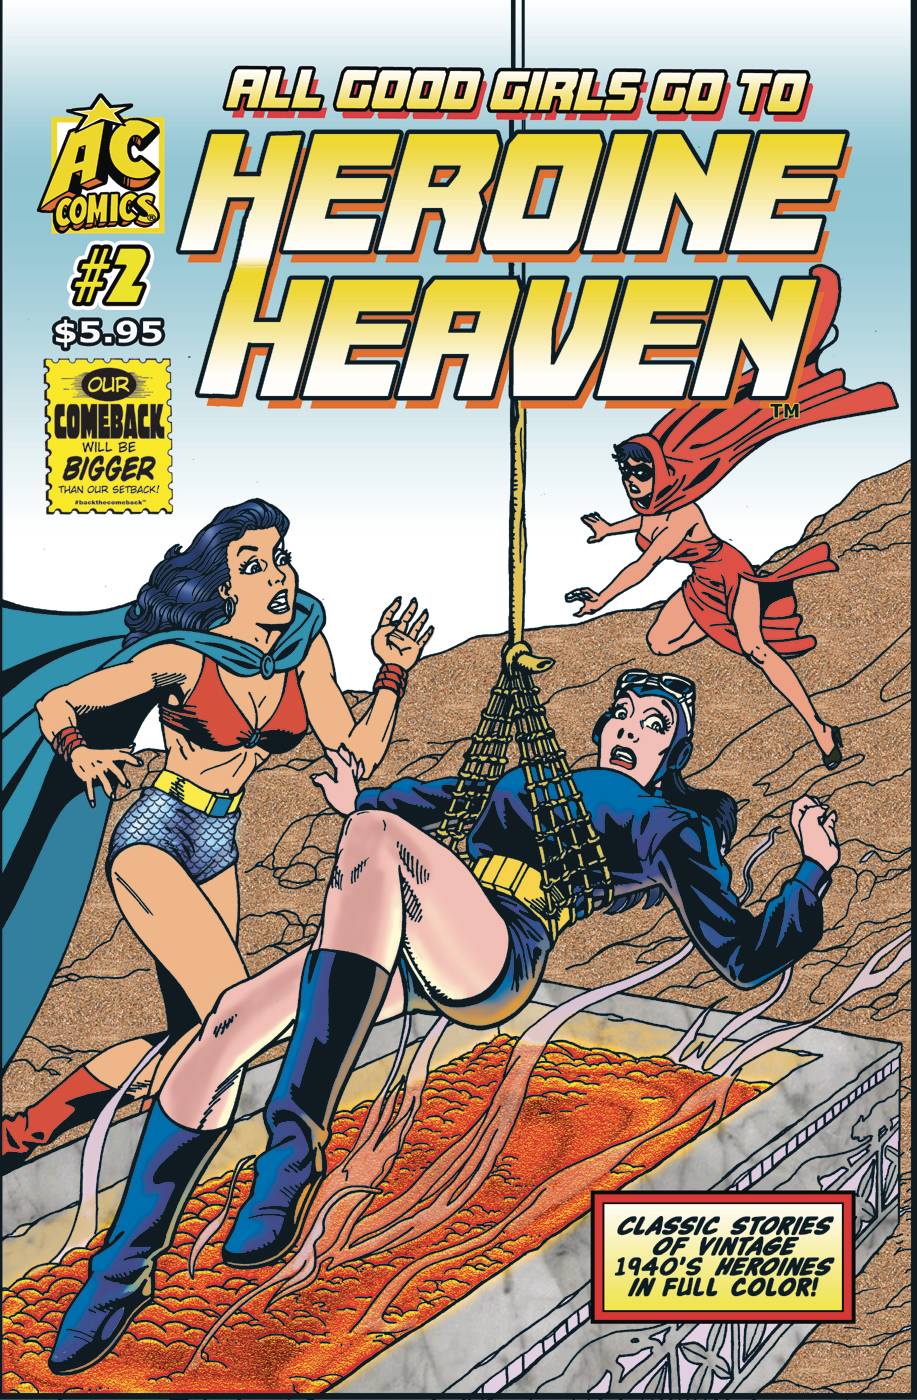 HEROINE HEAVEN #2